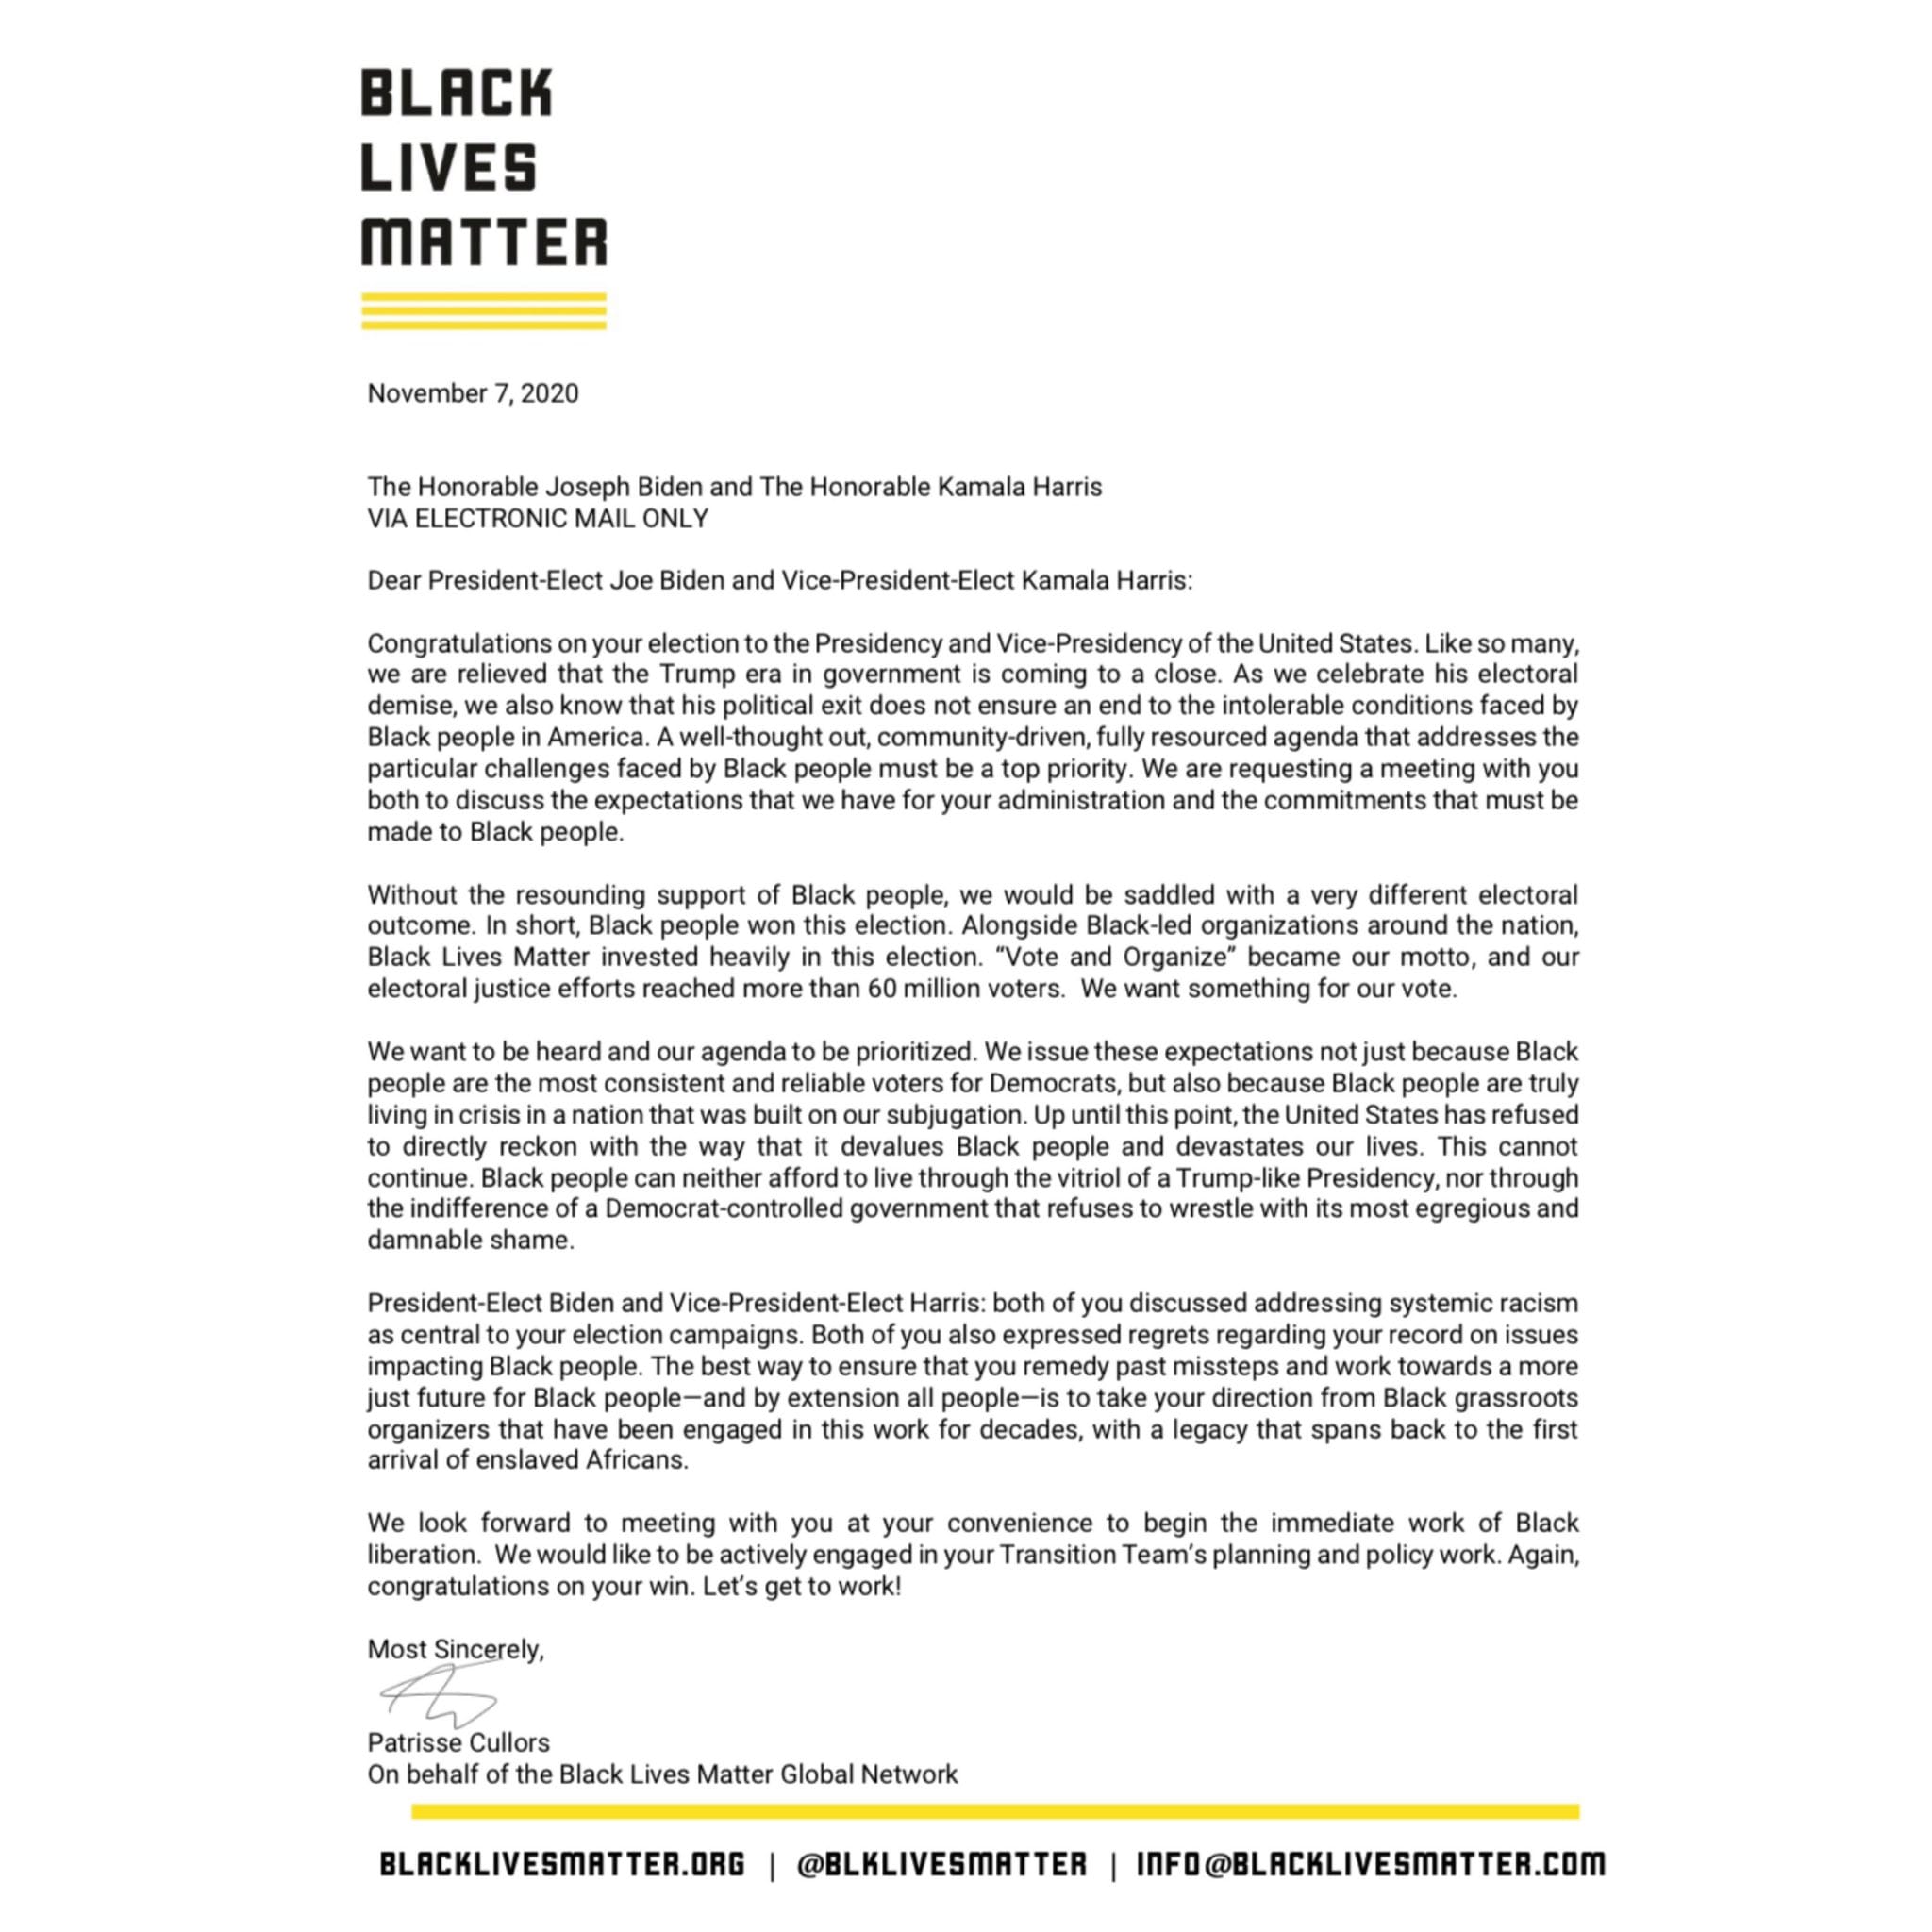 BLM letter to President-elect Joe Biden and Vice-president-elect Kamala Harris